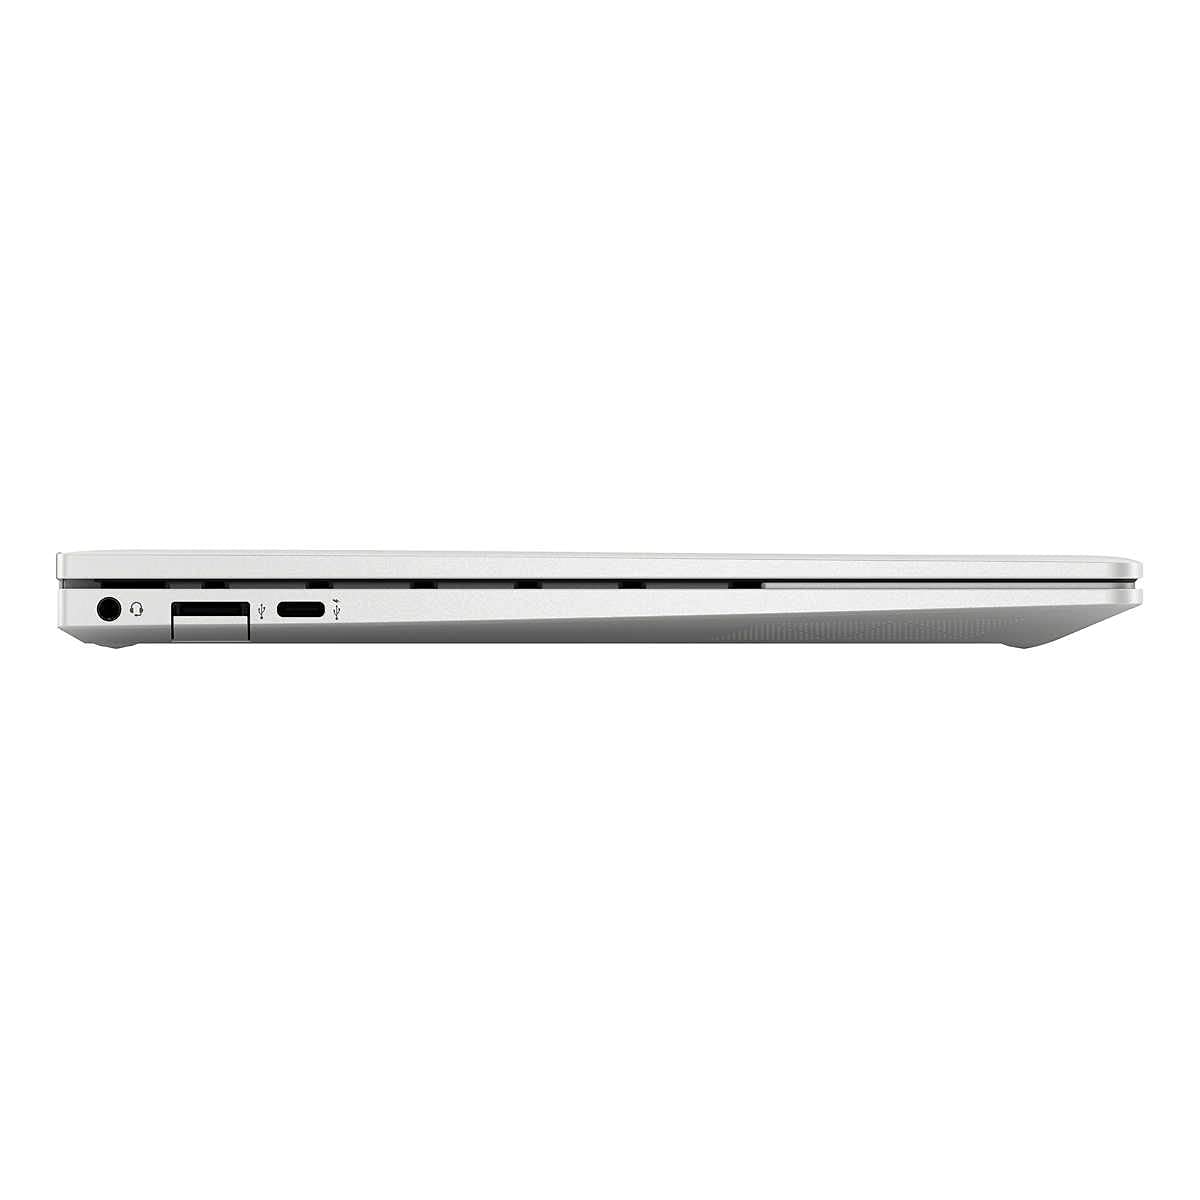 2021 HP Envy Laptop 13.3 inch FHD IPS Evo Platform 4-Core Intel i5-1135G7 Iris Xe Graphics 8GB DDR4 256GB NVMe SSD WI-FI 6 Win 10 Home Fingerprint Backlit Keyboard w/ Ontrend 32GB USB